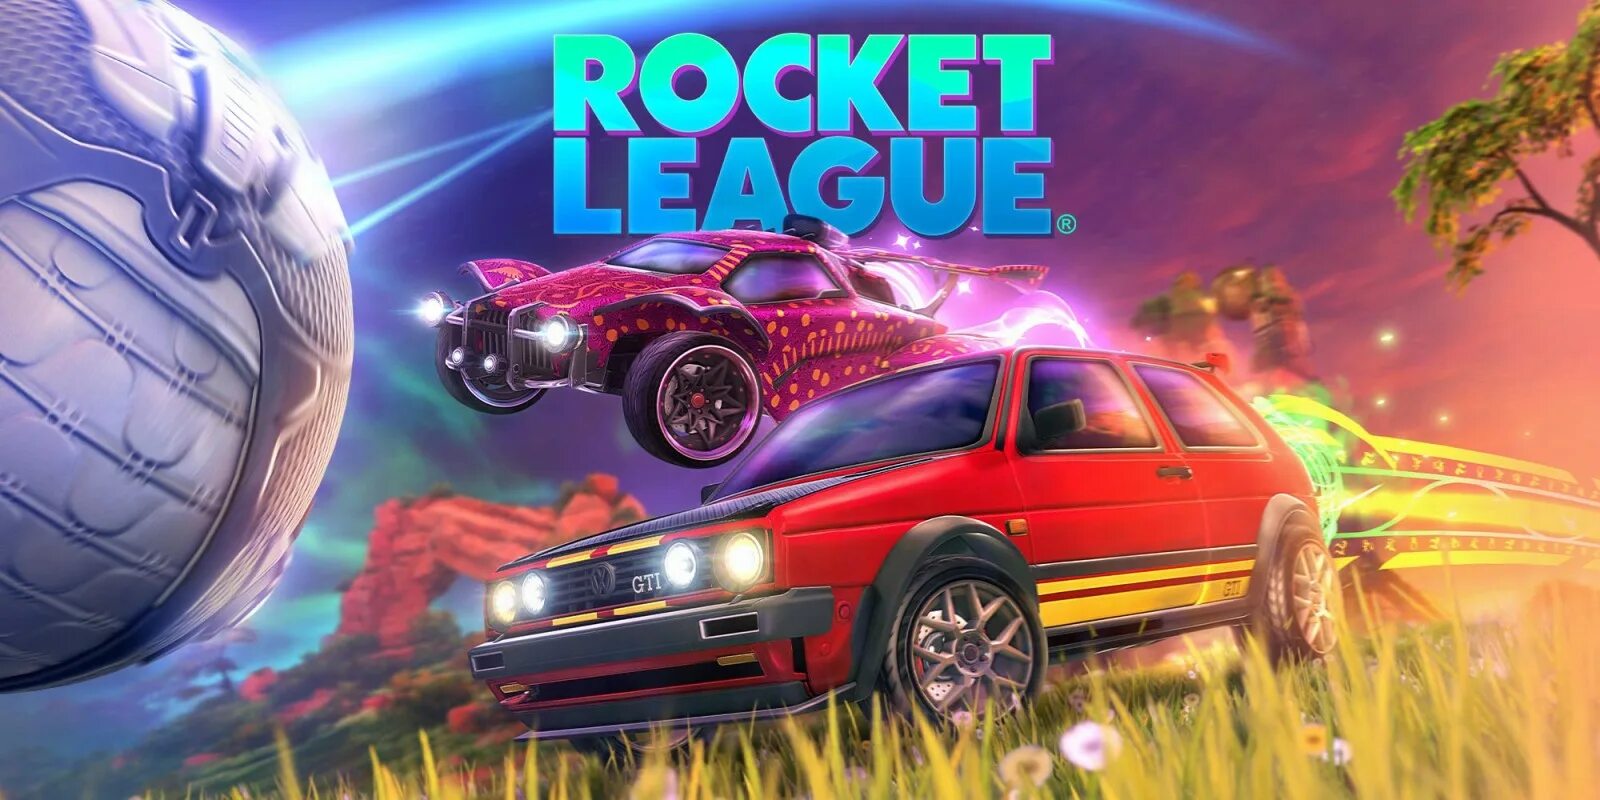 Рокет лига. Golf GTI Rocket League. Rocket x игра.